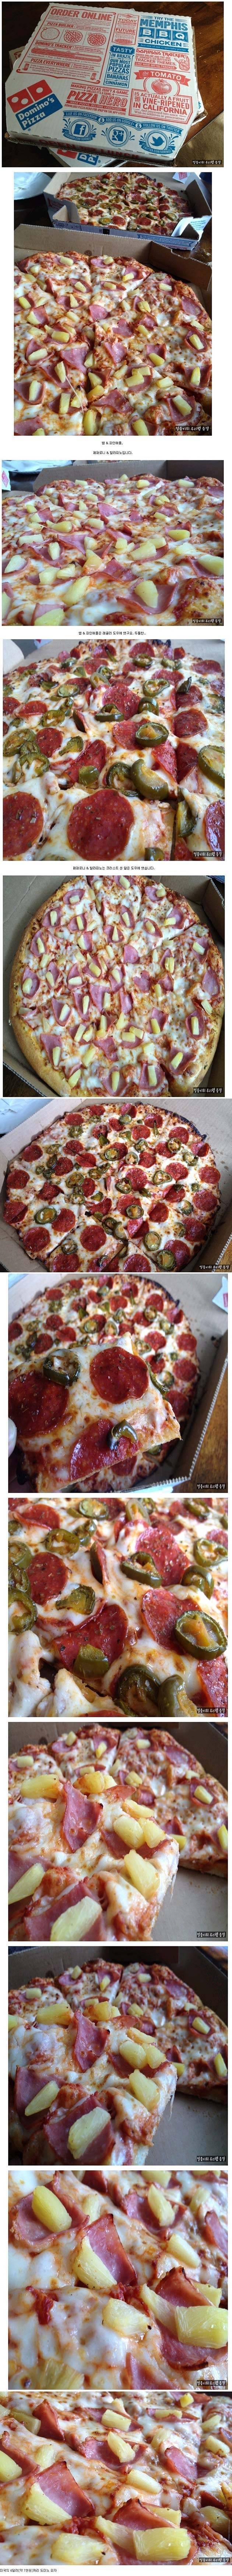 7.jpg 미국에 있는 흔한 7천원짜리 피자 퀄리티